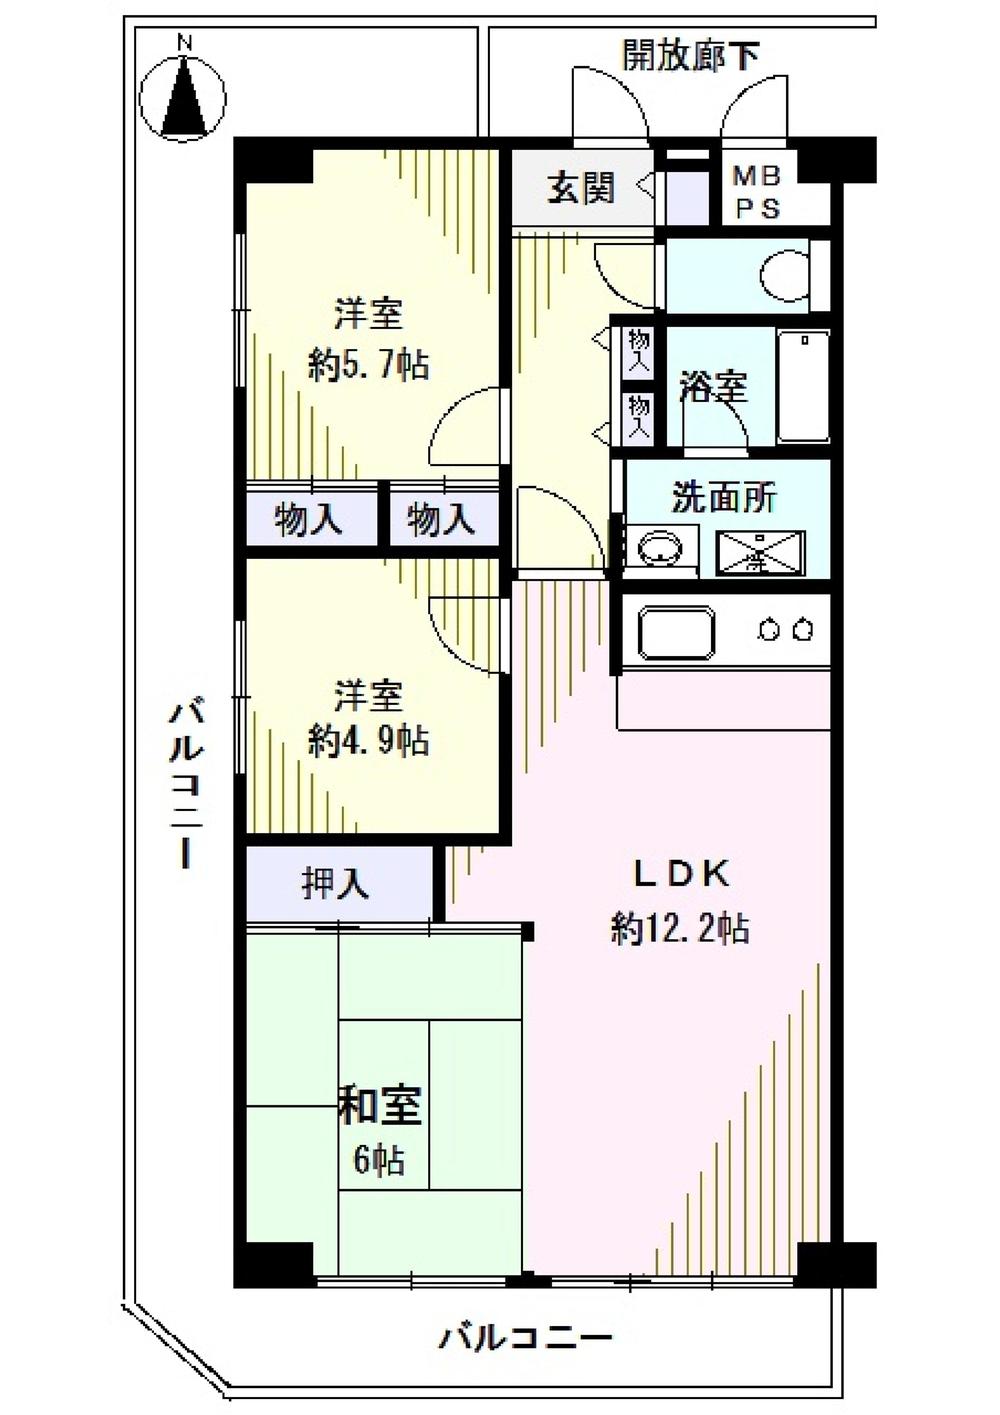 Floor plan. 3LDK, Price 14.8 million yen, Footprint 69 sq m , Balcony area 20.38 sq m